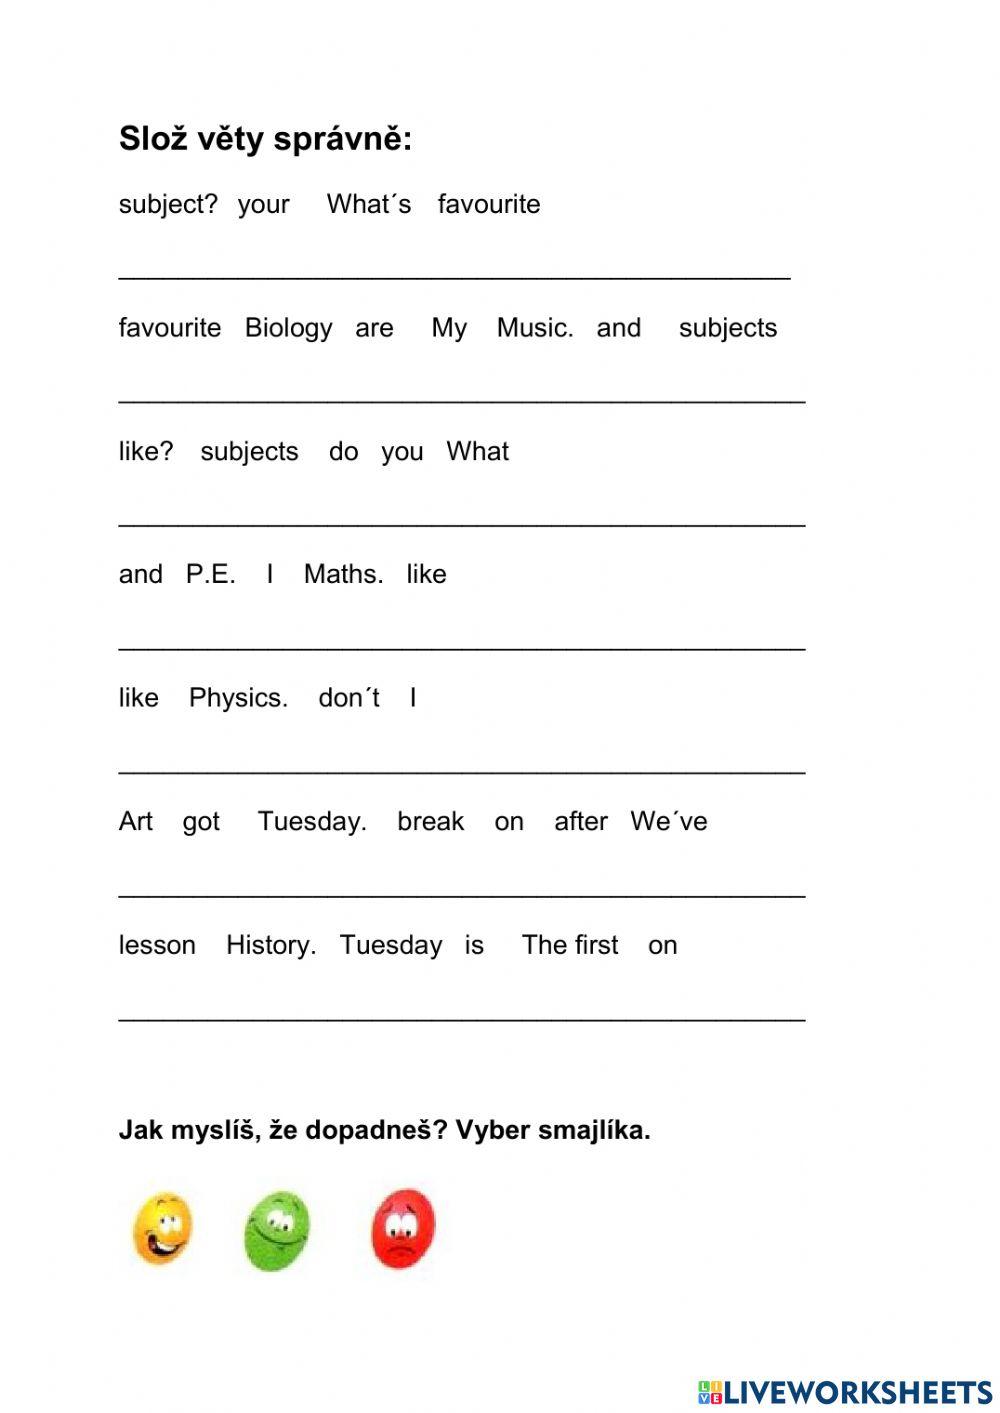 Timetable - sentences